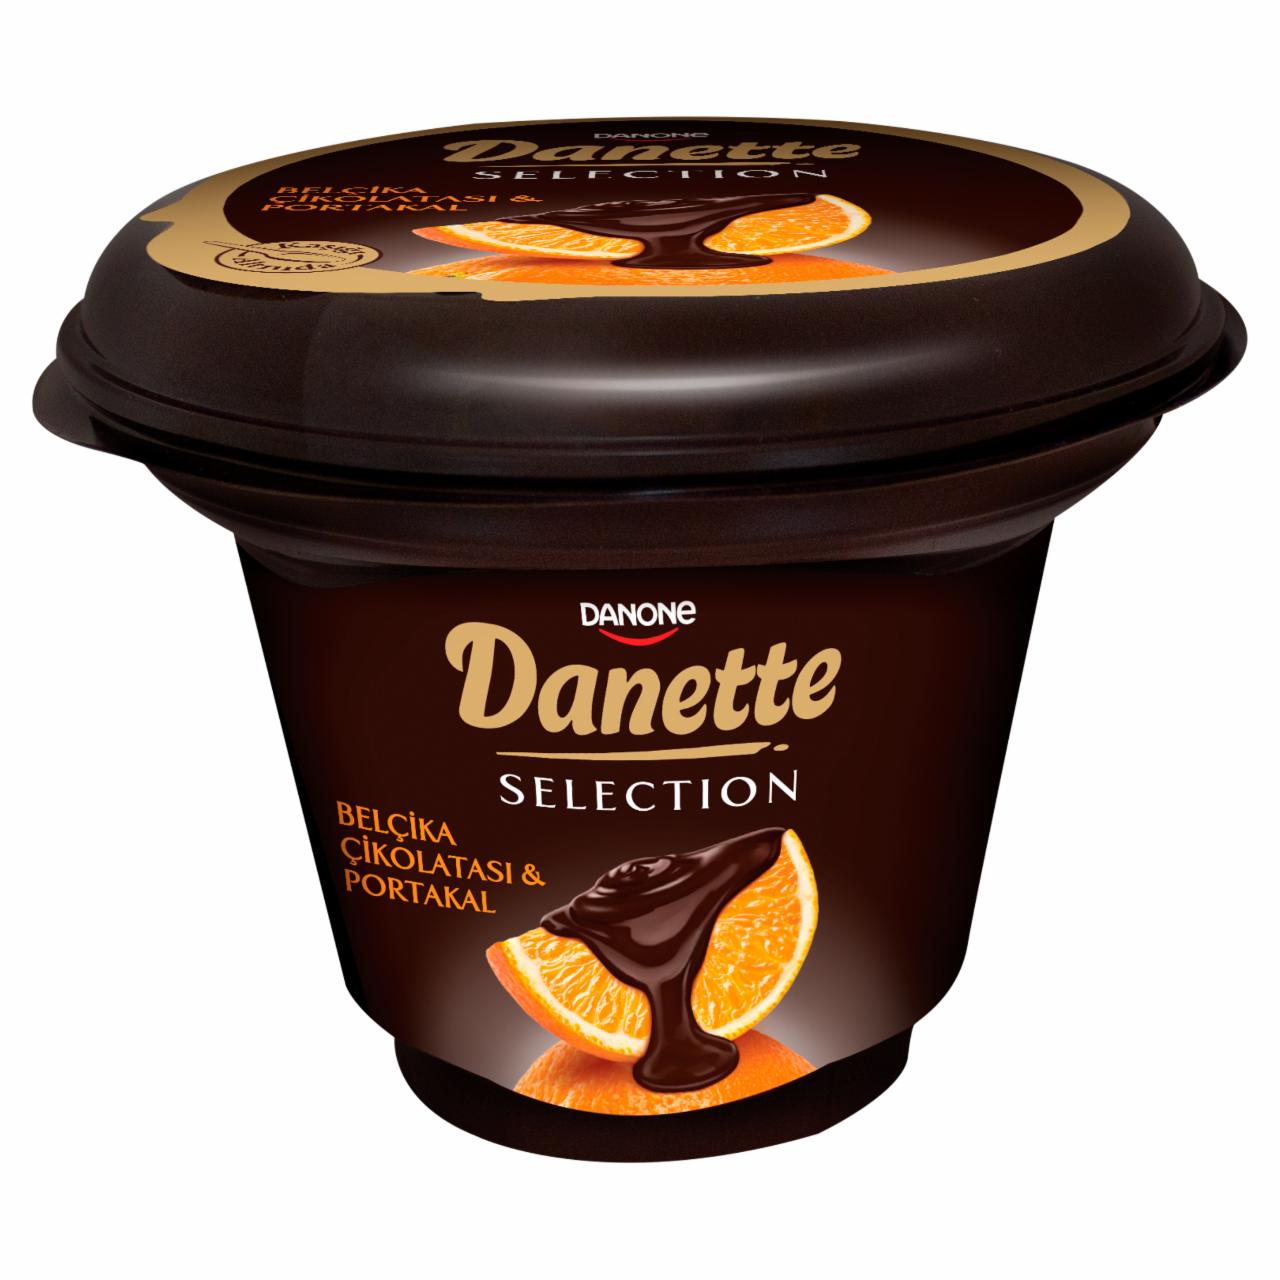 Képek - Danone Danette Selection narancsízesítésű csokoládéízű puding 165 g